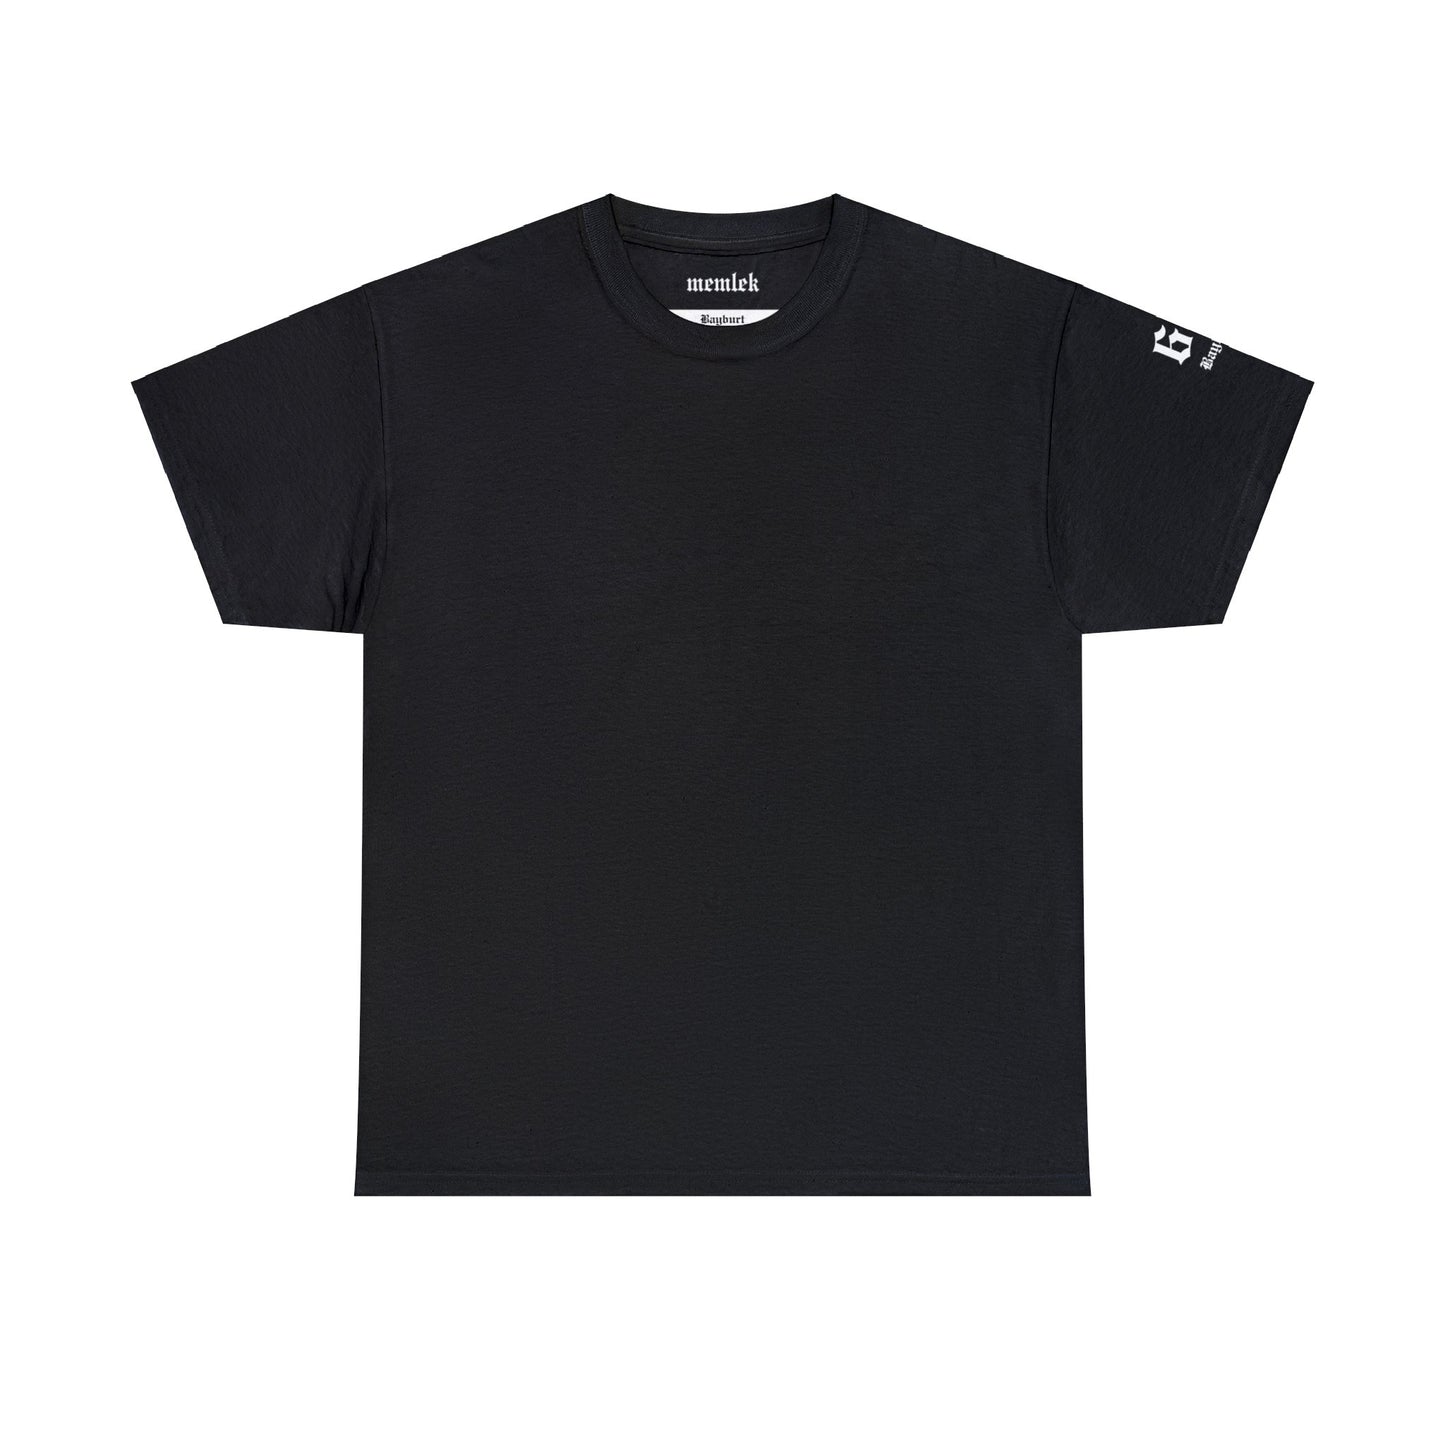 İlçem - 69 Bayburt - T-Shirt - Back Print - Black